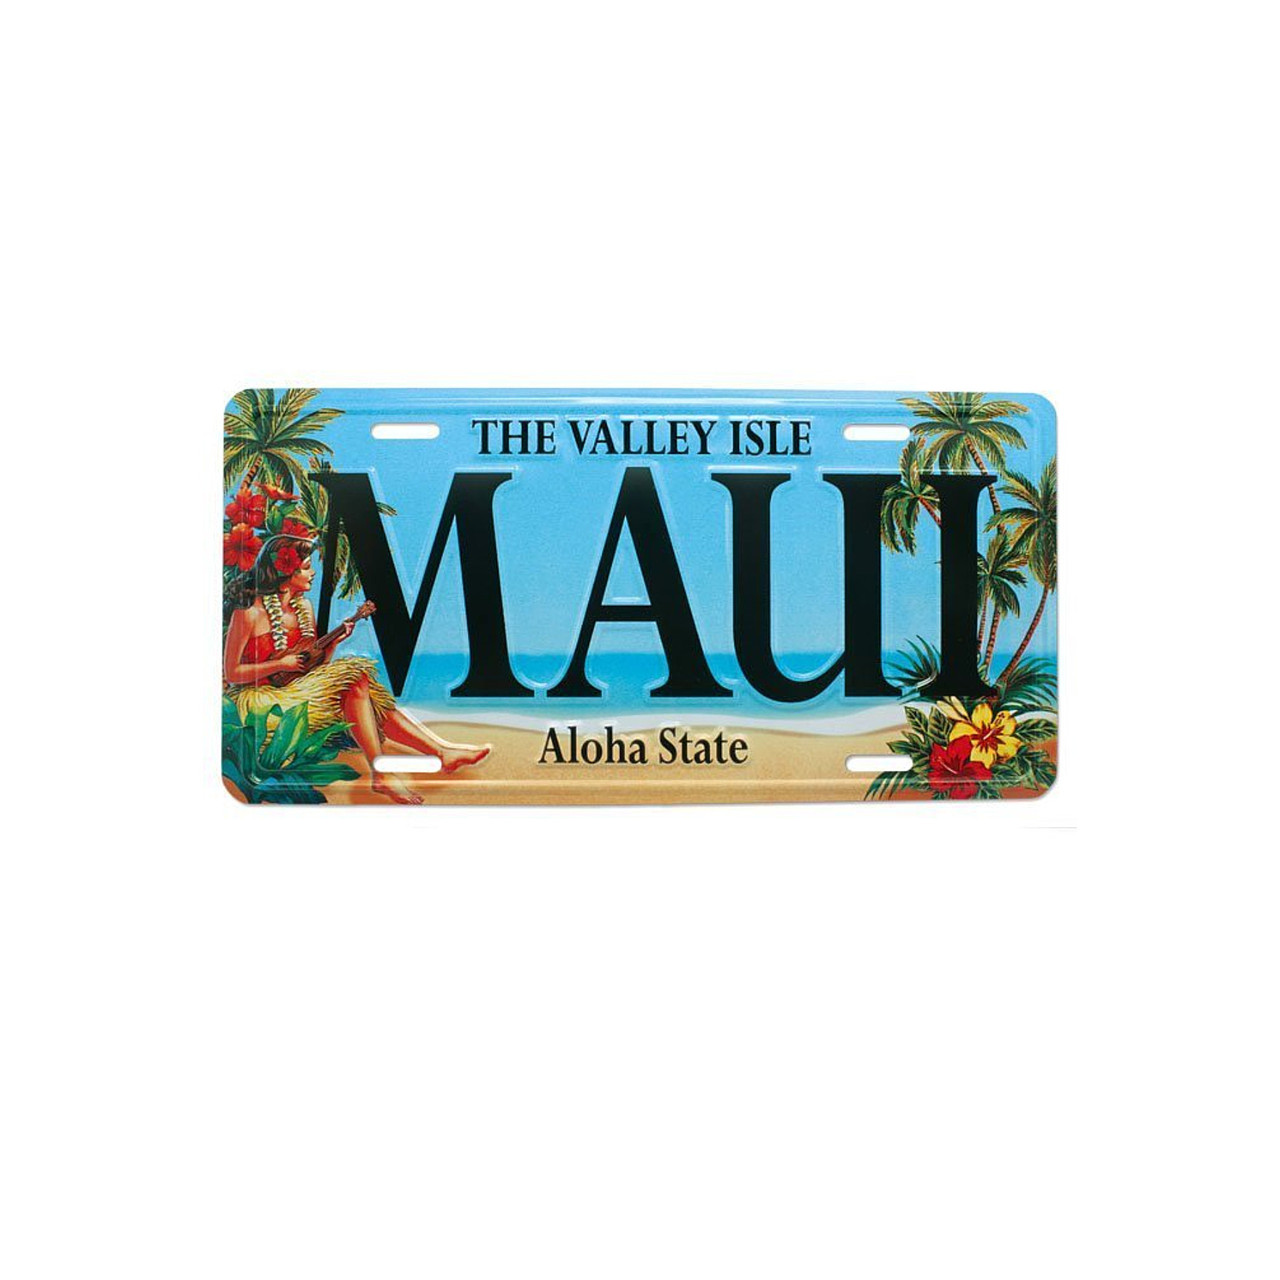 Kauai with Rooster Hawaiian Novelty License Plate from Hawaii 